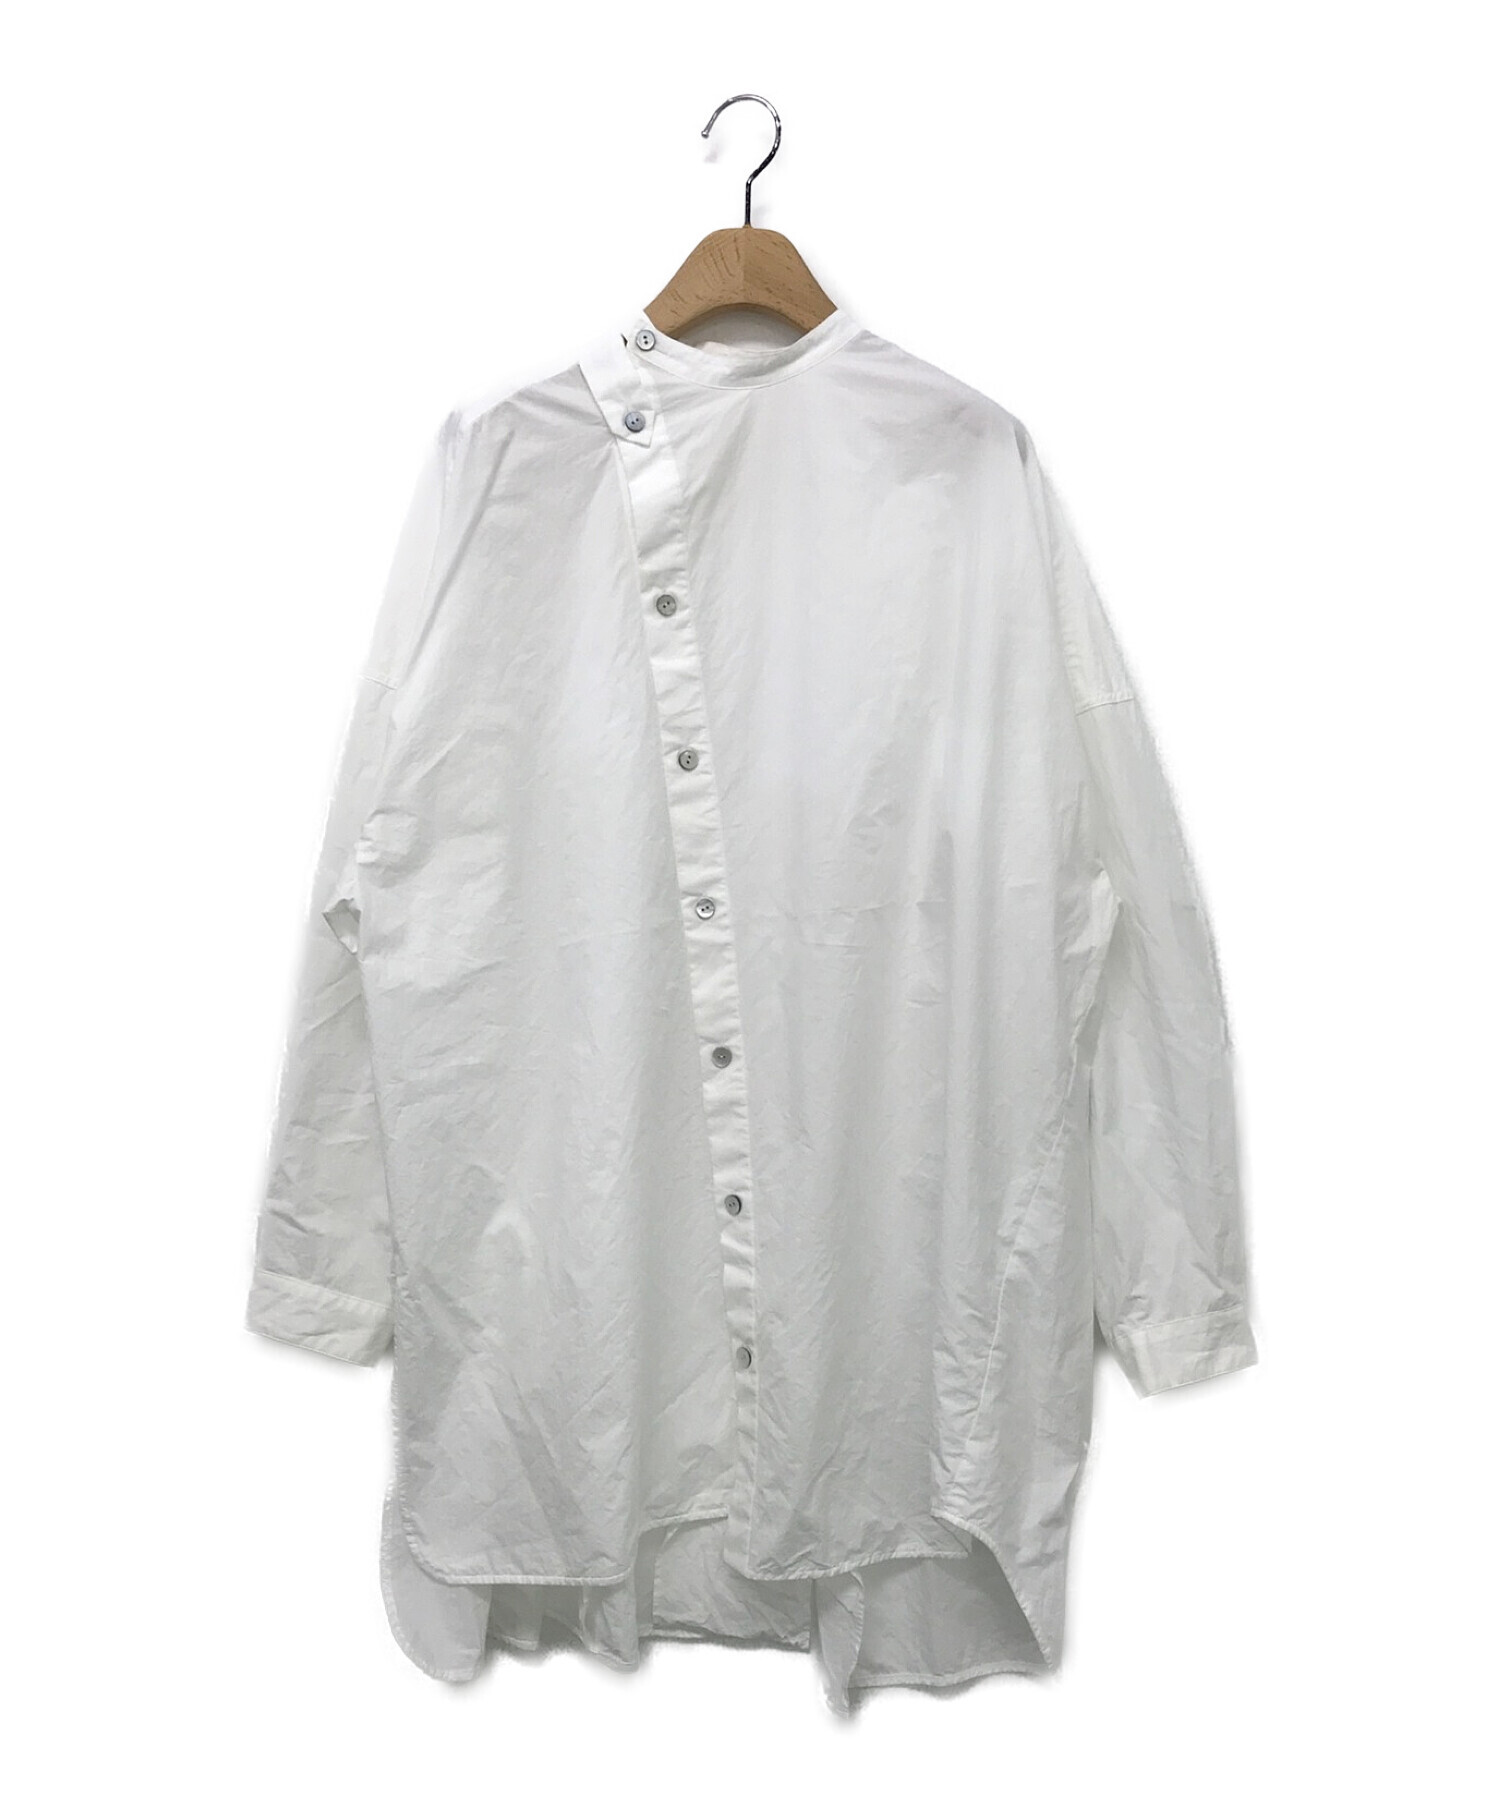 nagonstans (ナゴンスタンス) スタンドネックシャツ ホワイト サイズ:38